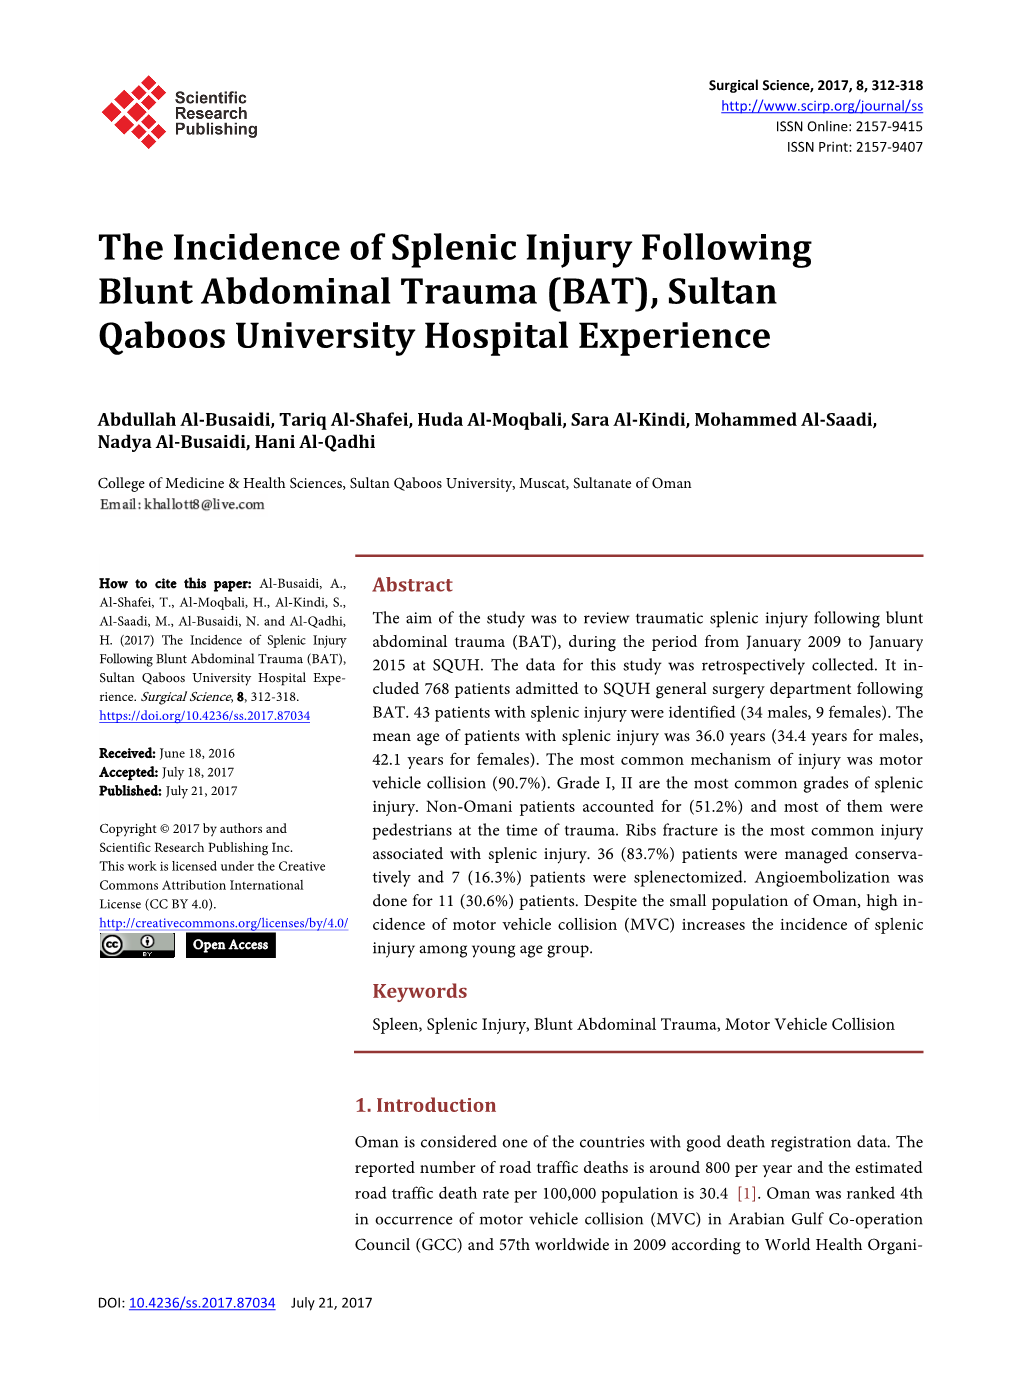 The Incidence of Splenic Injury Following Blunt Abdominal Trauma (BAT), Sultan Qaboos University Hospital Experience